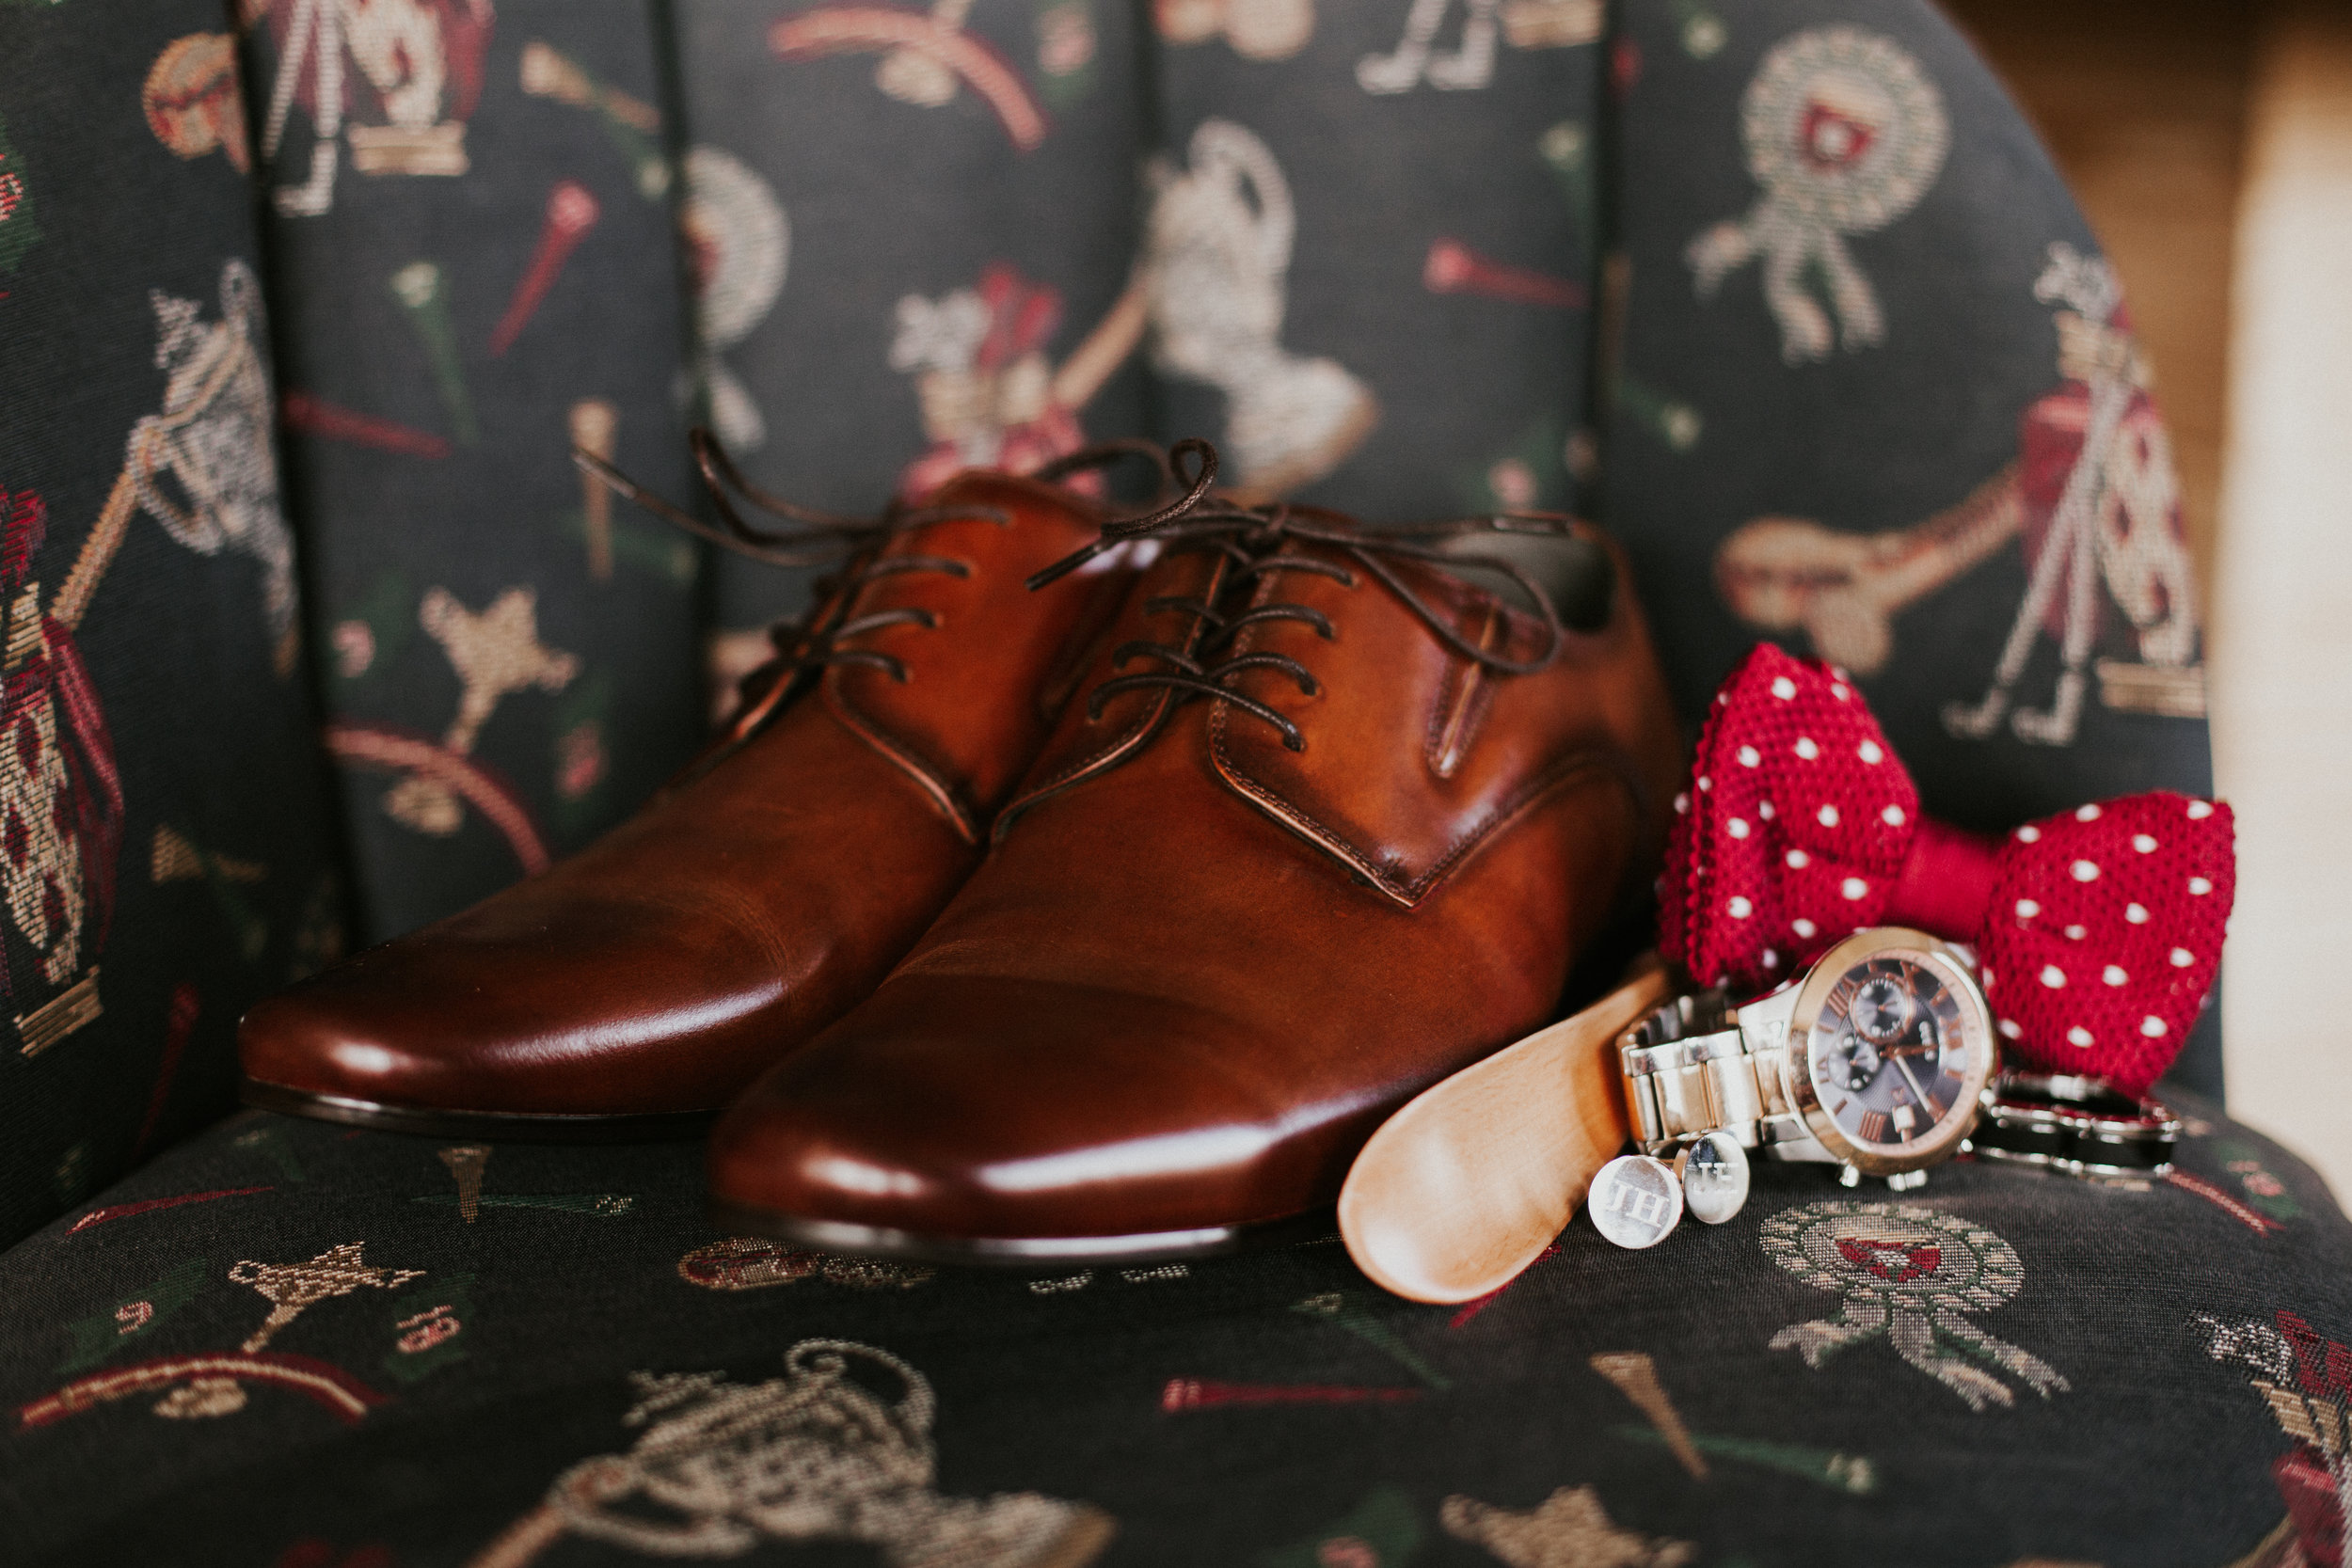  Hope Valley Country Club, Raleigh NC | Fall wedding | Groom’s detail photo - Red polka-dot bow-tie, custom cufflinks | Marina Rey Photography 